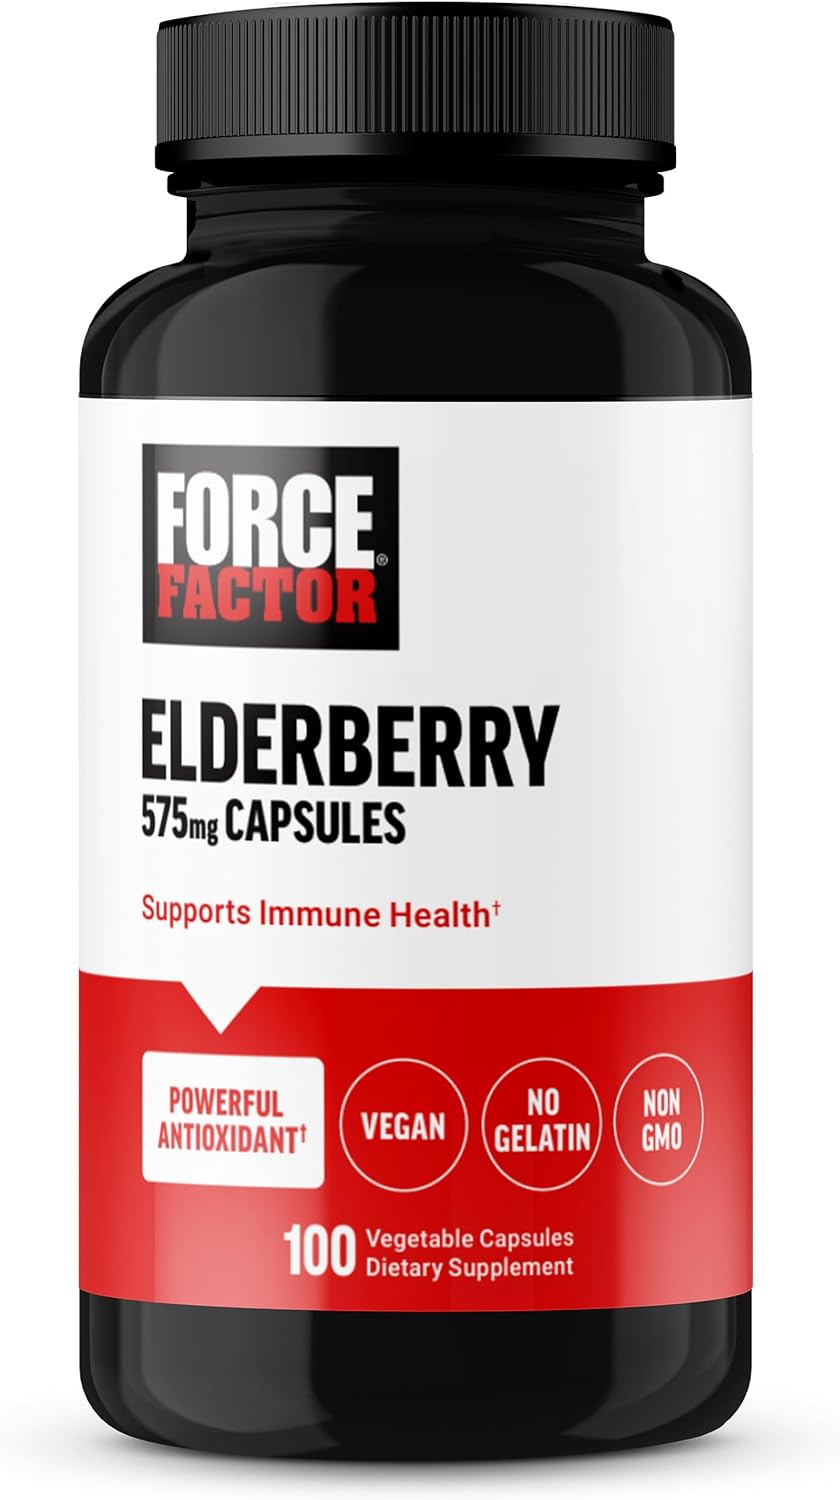 FORCE FACTOR Elderberry Capsules, Immunity Supplement and Antioxidants Supplement for Men and Women, Daily Immunity Boost, Vegan, No Gelatin, Non-GMO, 100 Vegetable Capsules